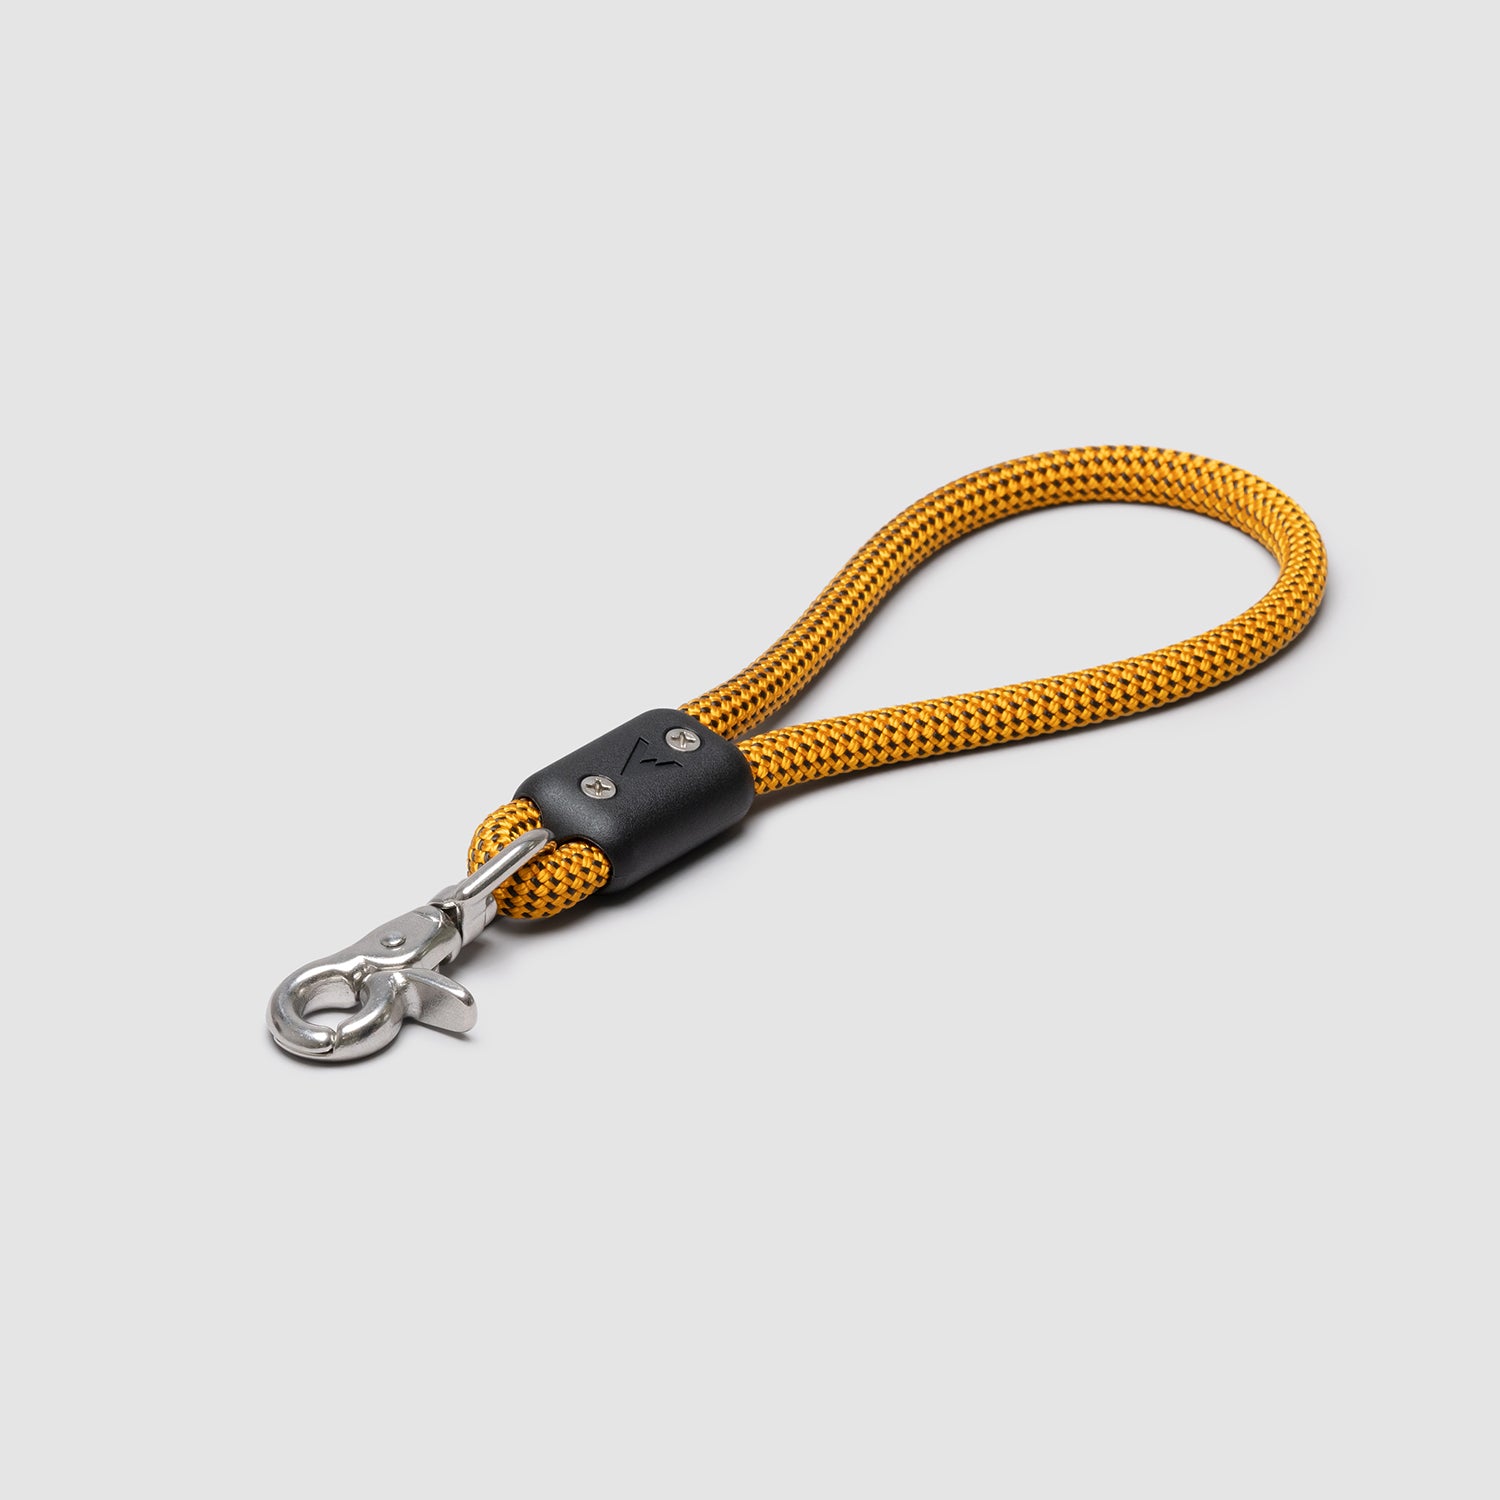 atlas pet company lifetime handle climbing rope lifetime warranty trail handle for active dogs --honey